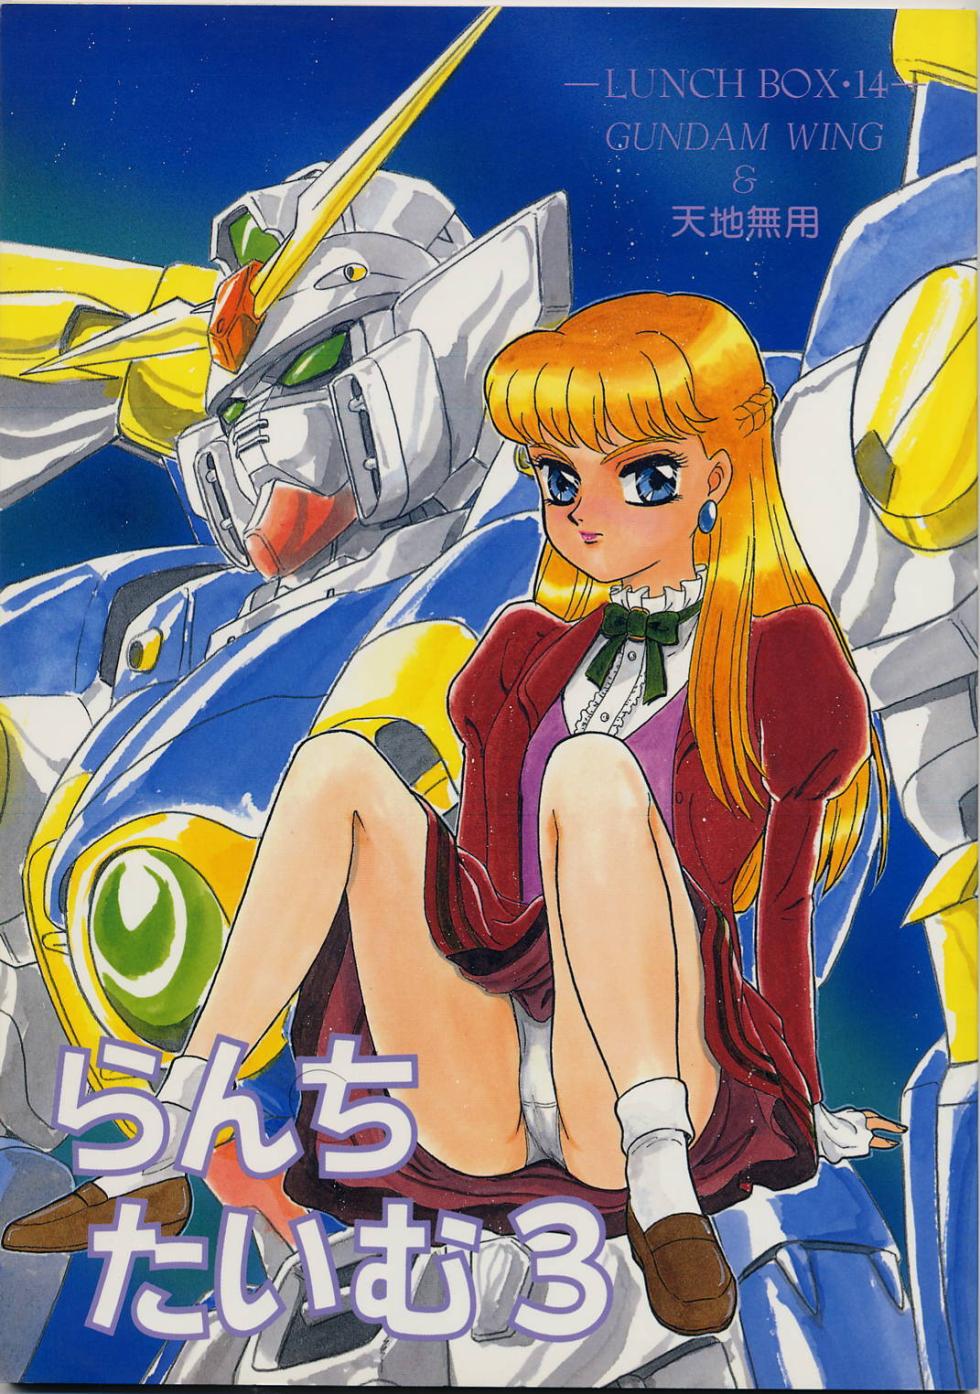 [Chandora & LUNCH BOX (Makunouchi Isami)] LUNCH BOX 14 - Lunch Time 3 (Gundam Wing, Tenchi Muyo) - Page 1